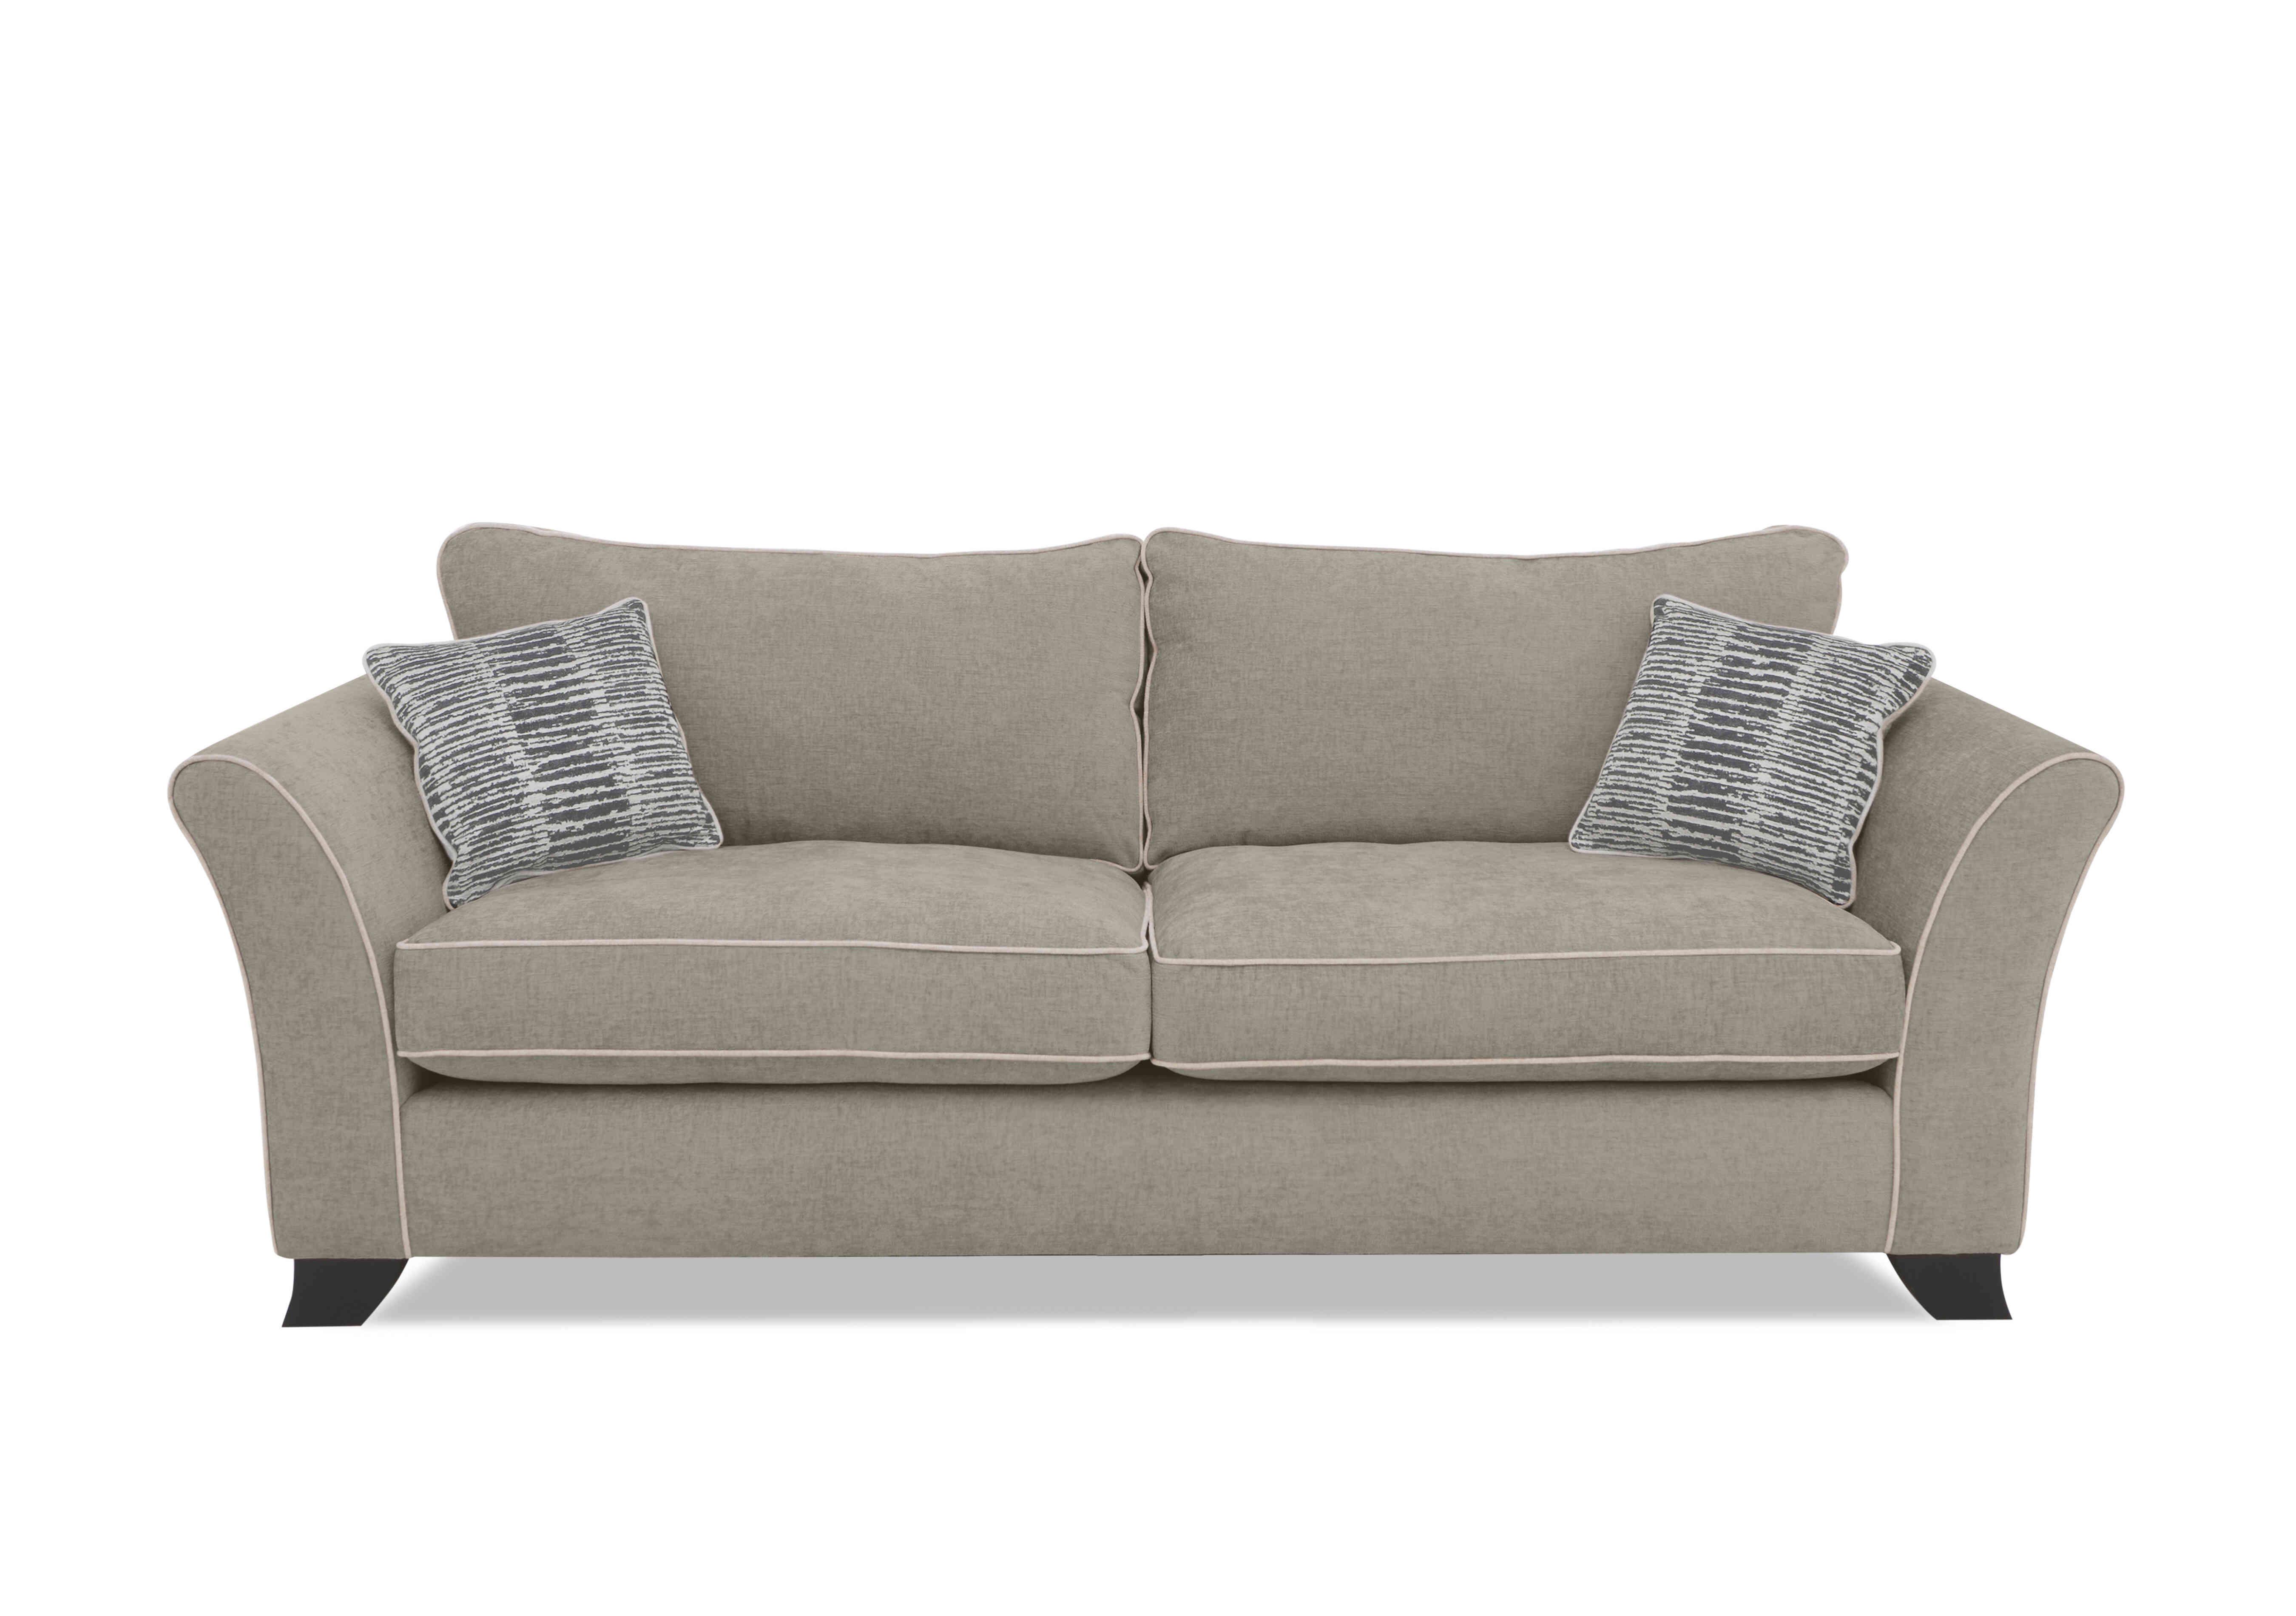 Stellar 4 Seater Classic Back Sofa in Bolero Quill Contrast on Furniture Village